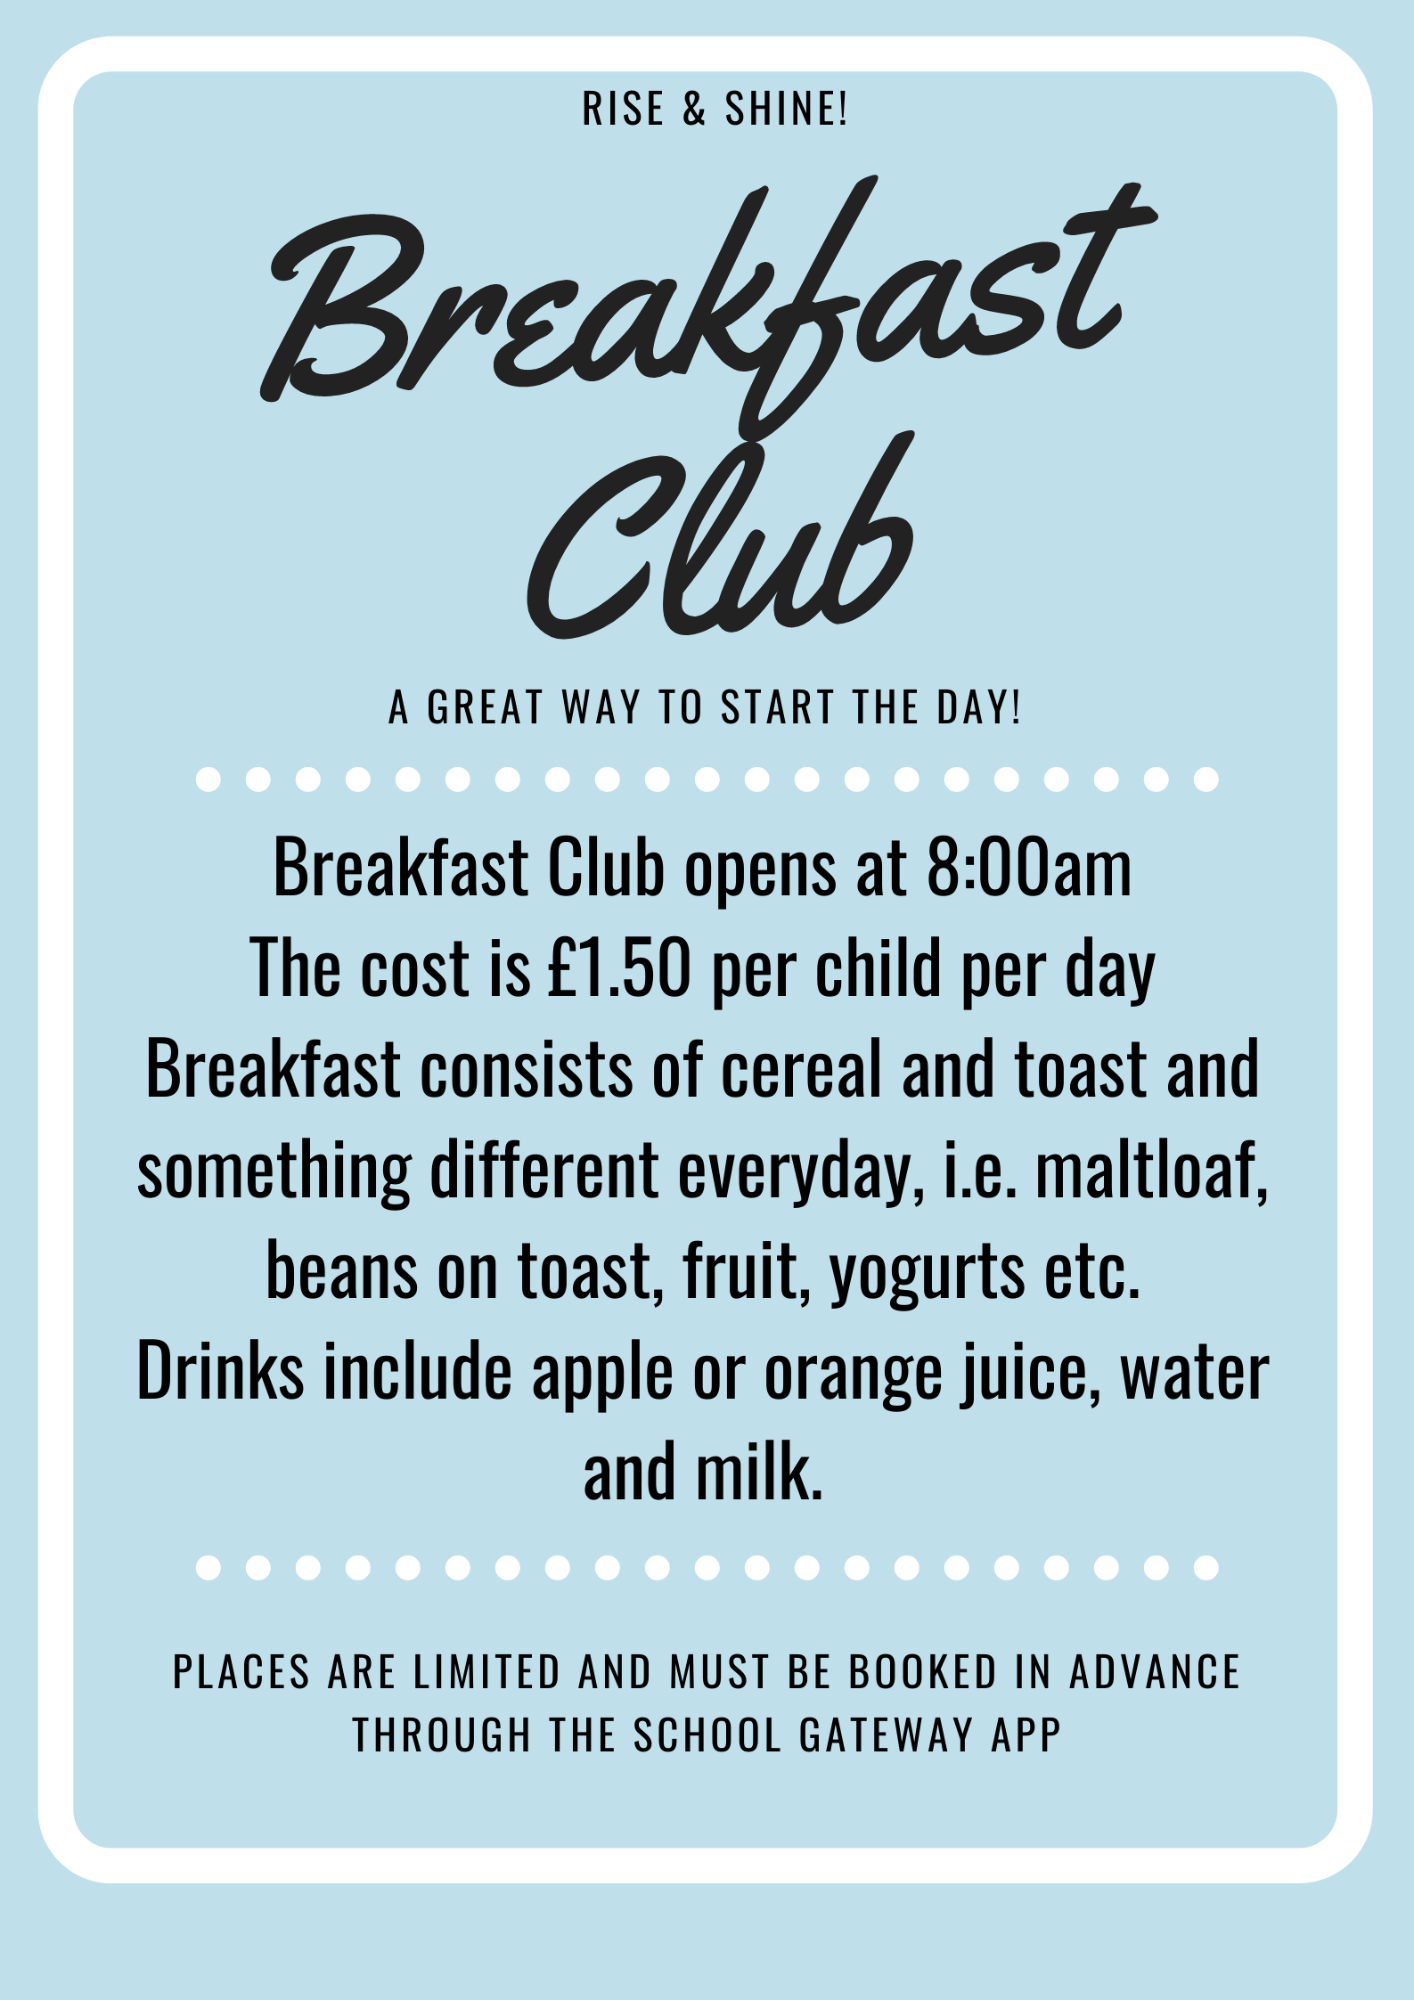 Details of breakfast club